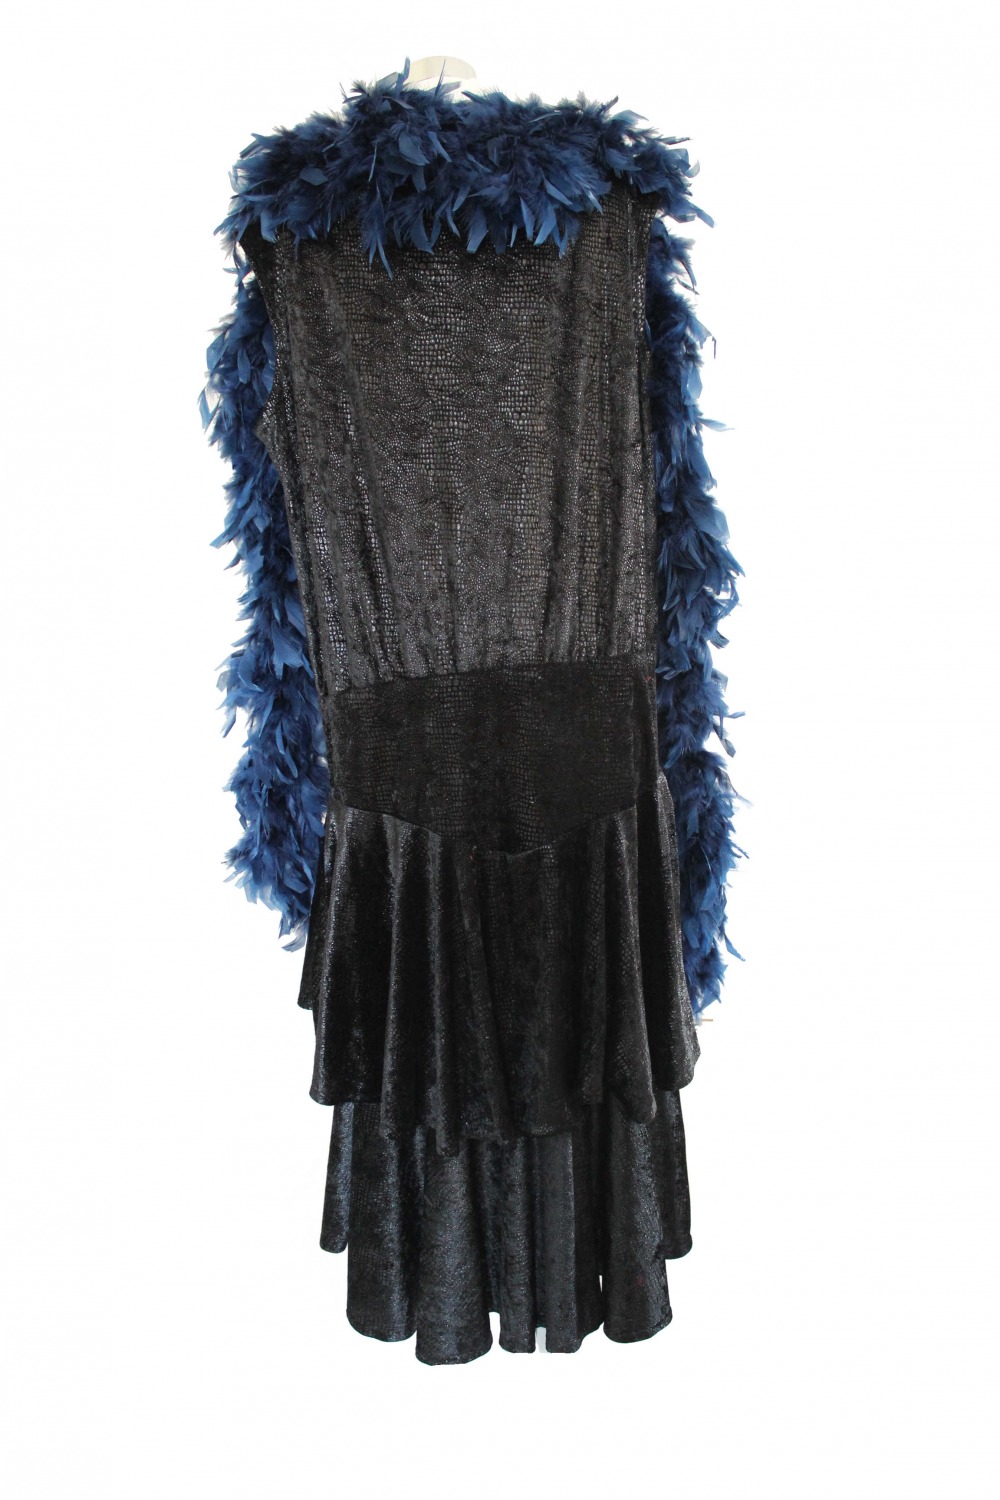 Ladies 1920s 1930s Flapper Charleston Costume Size 16 - 20 Image